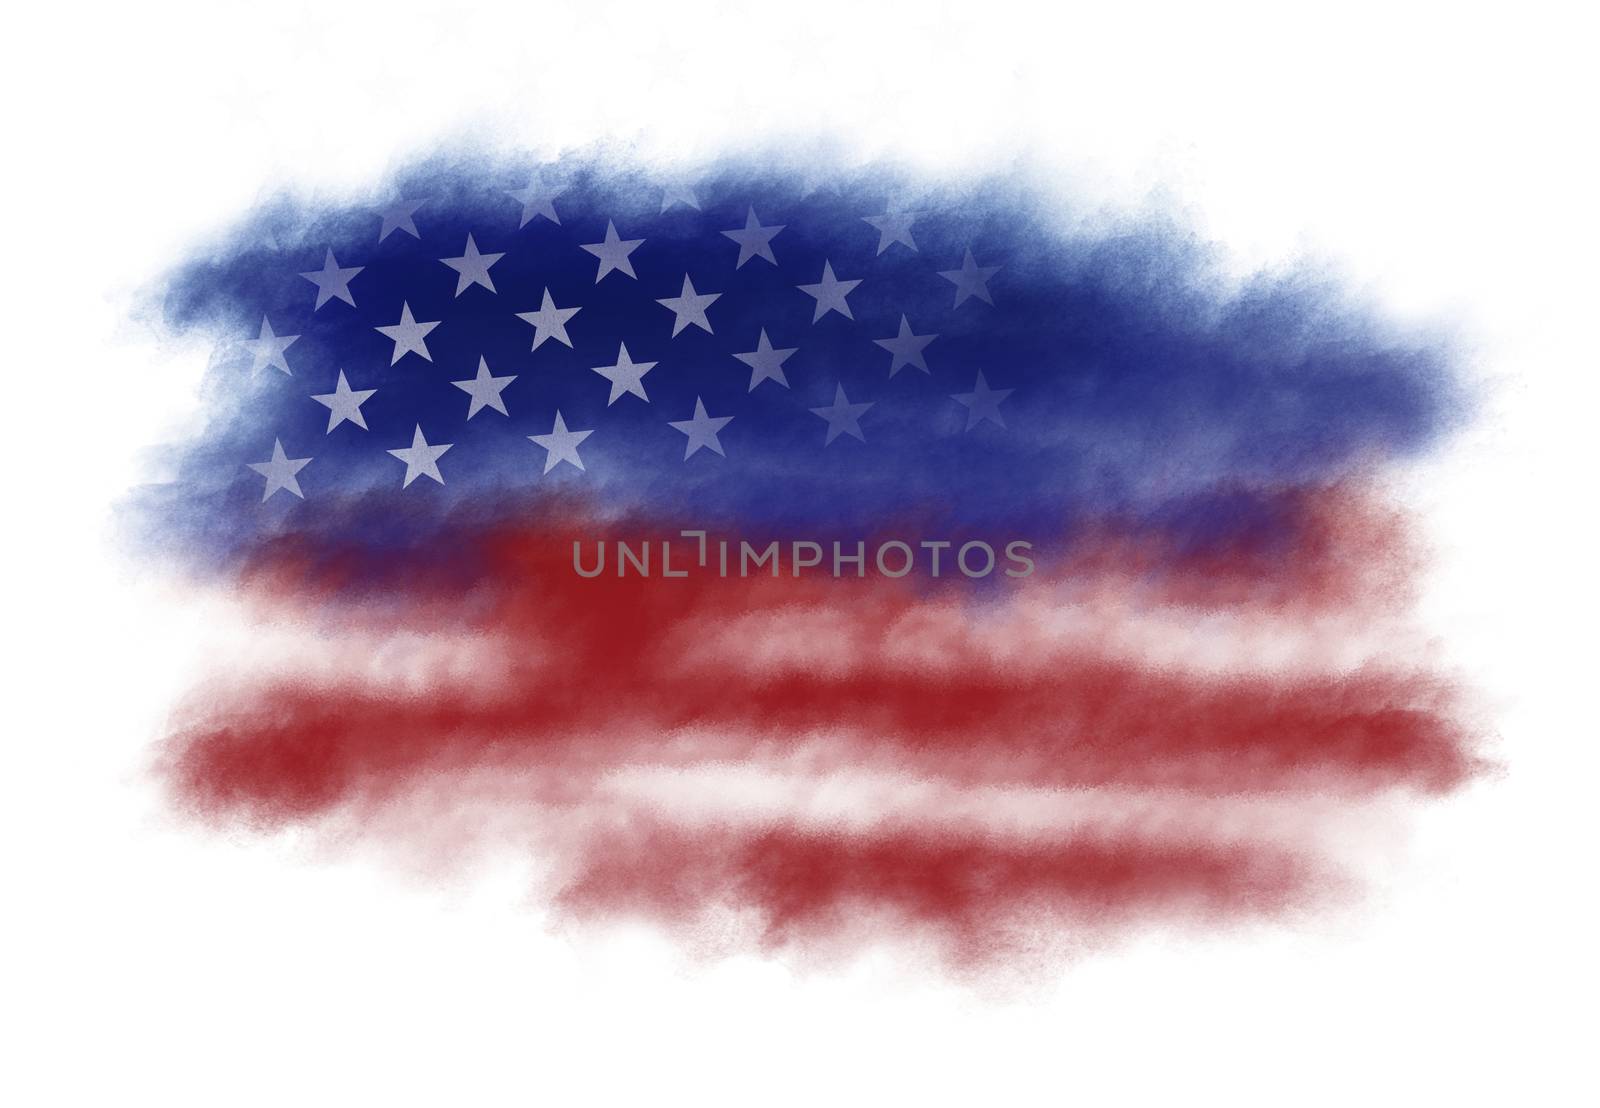 USA or american flag watercolor brush stroke on white background illustration